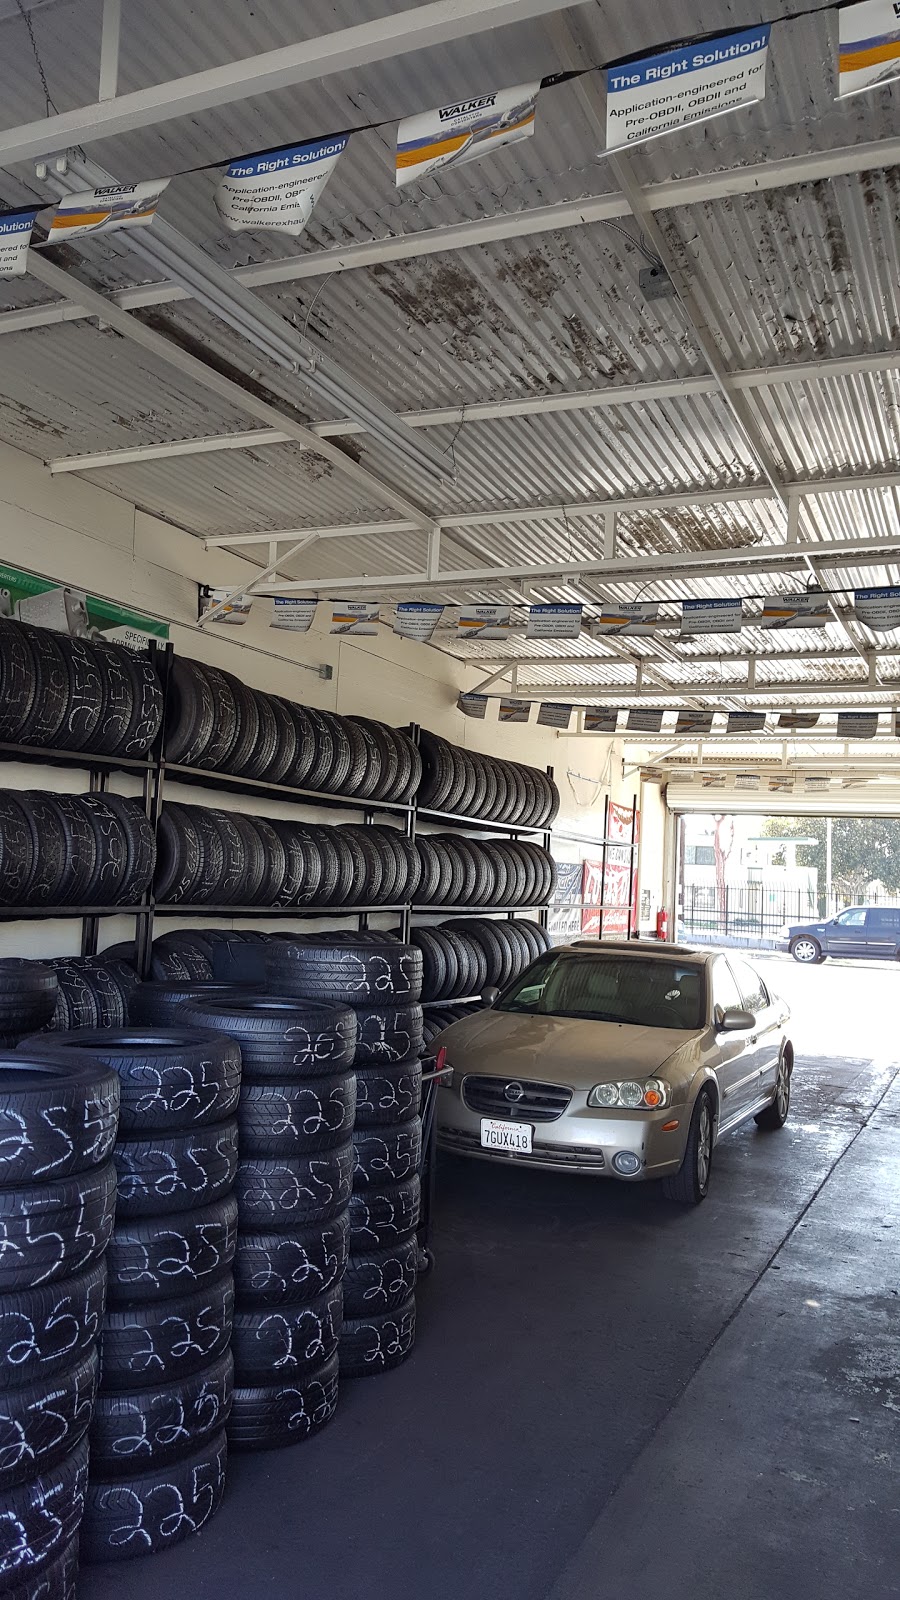 JJs main auto and Tire service | 3636 Main St, San Diego, CA 92113 | Phone: (619) 795-3555